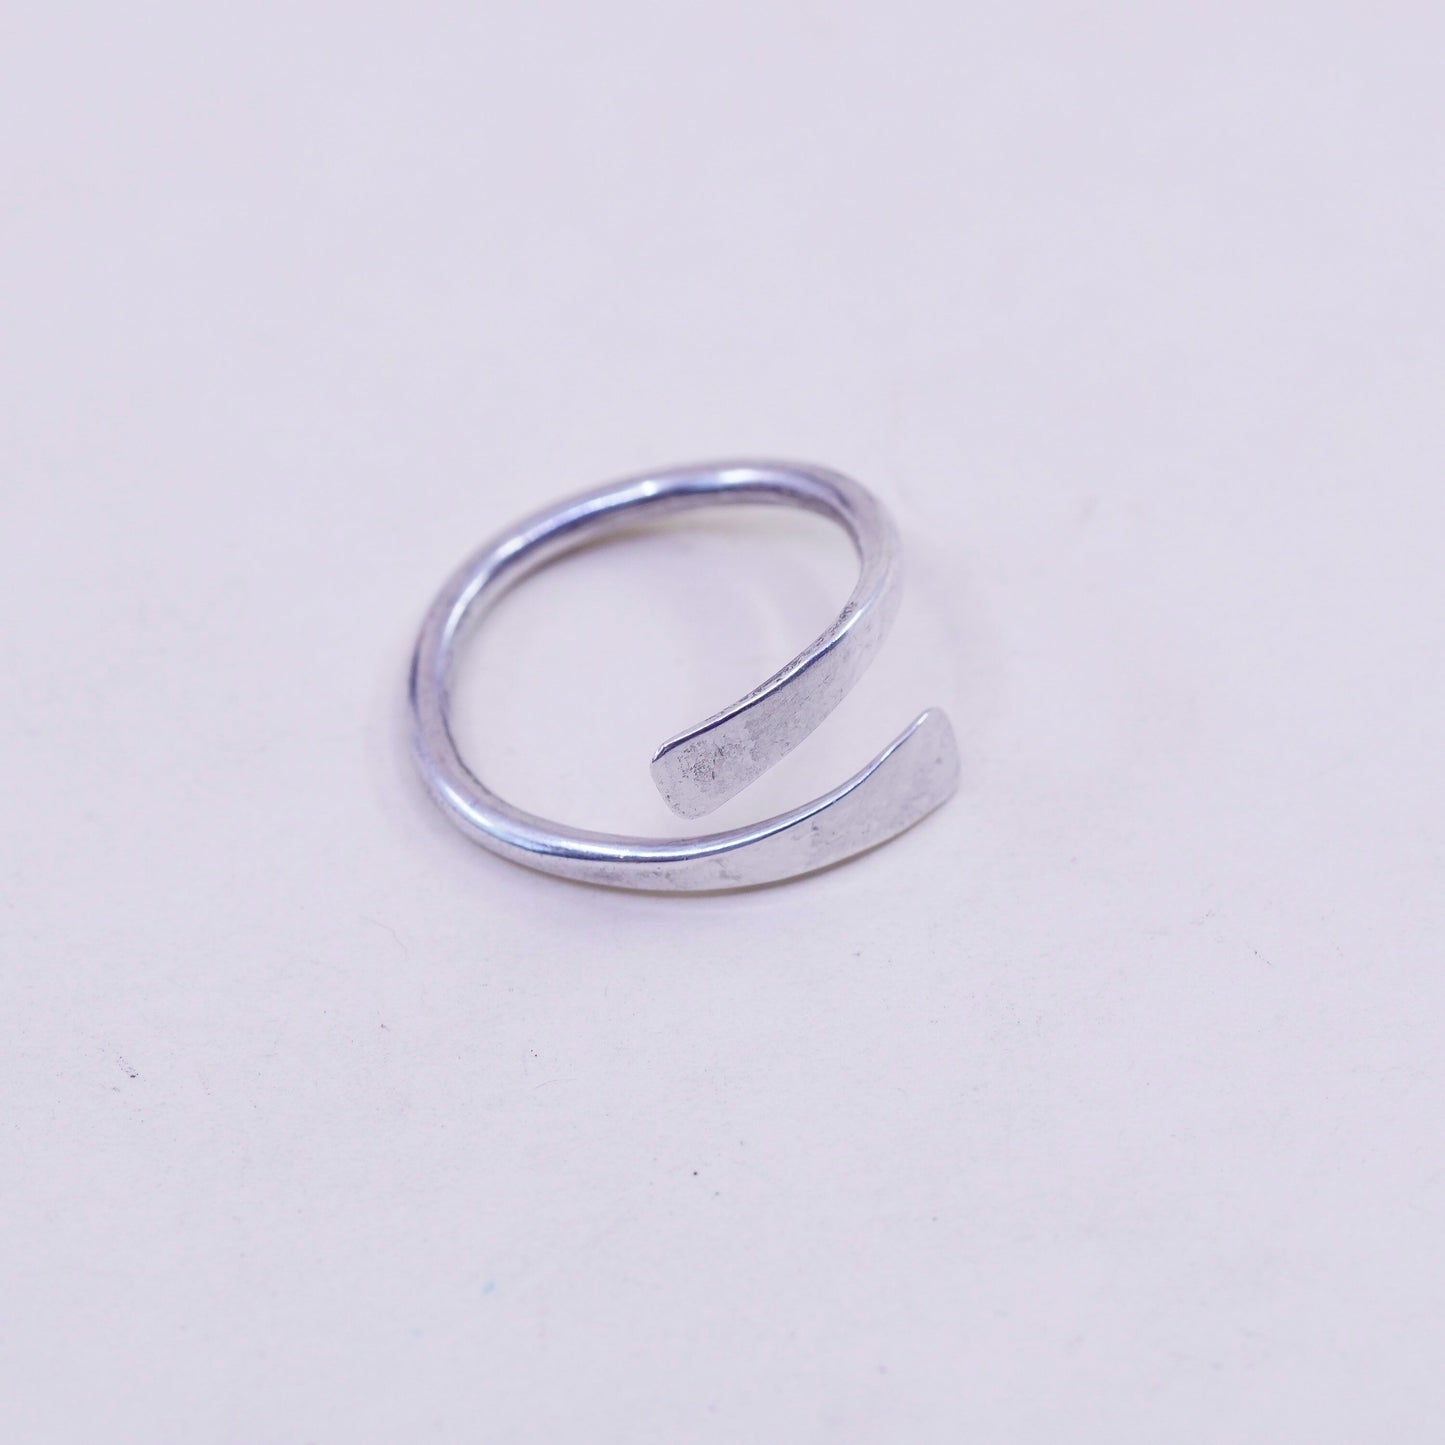 Size adjustable, vintage sterling silver handmade statement ring, 925 wrap band